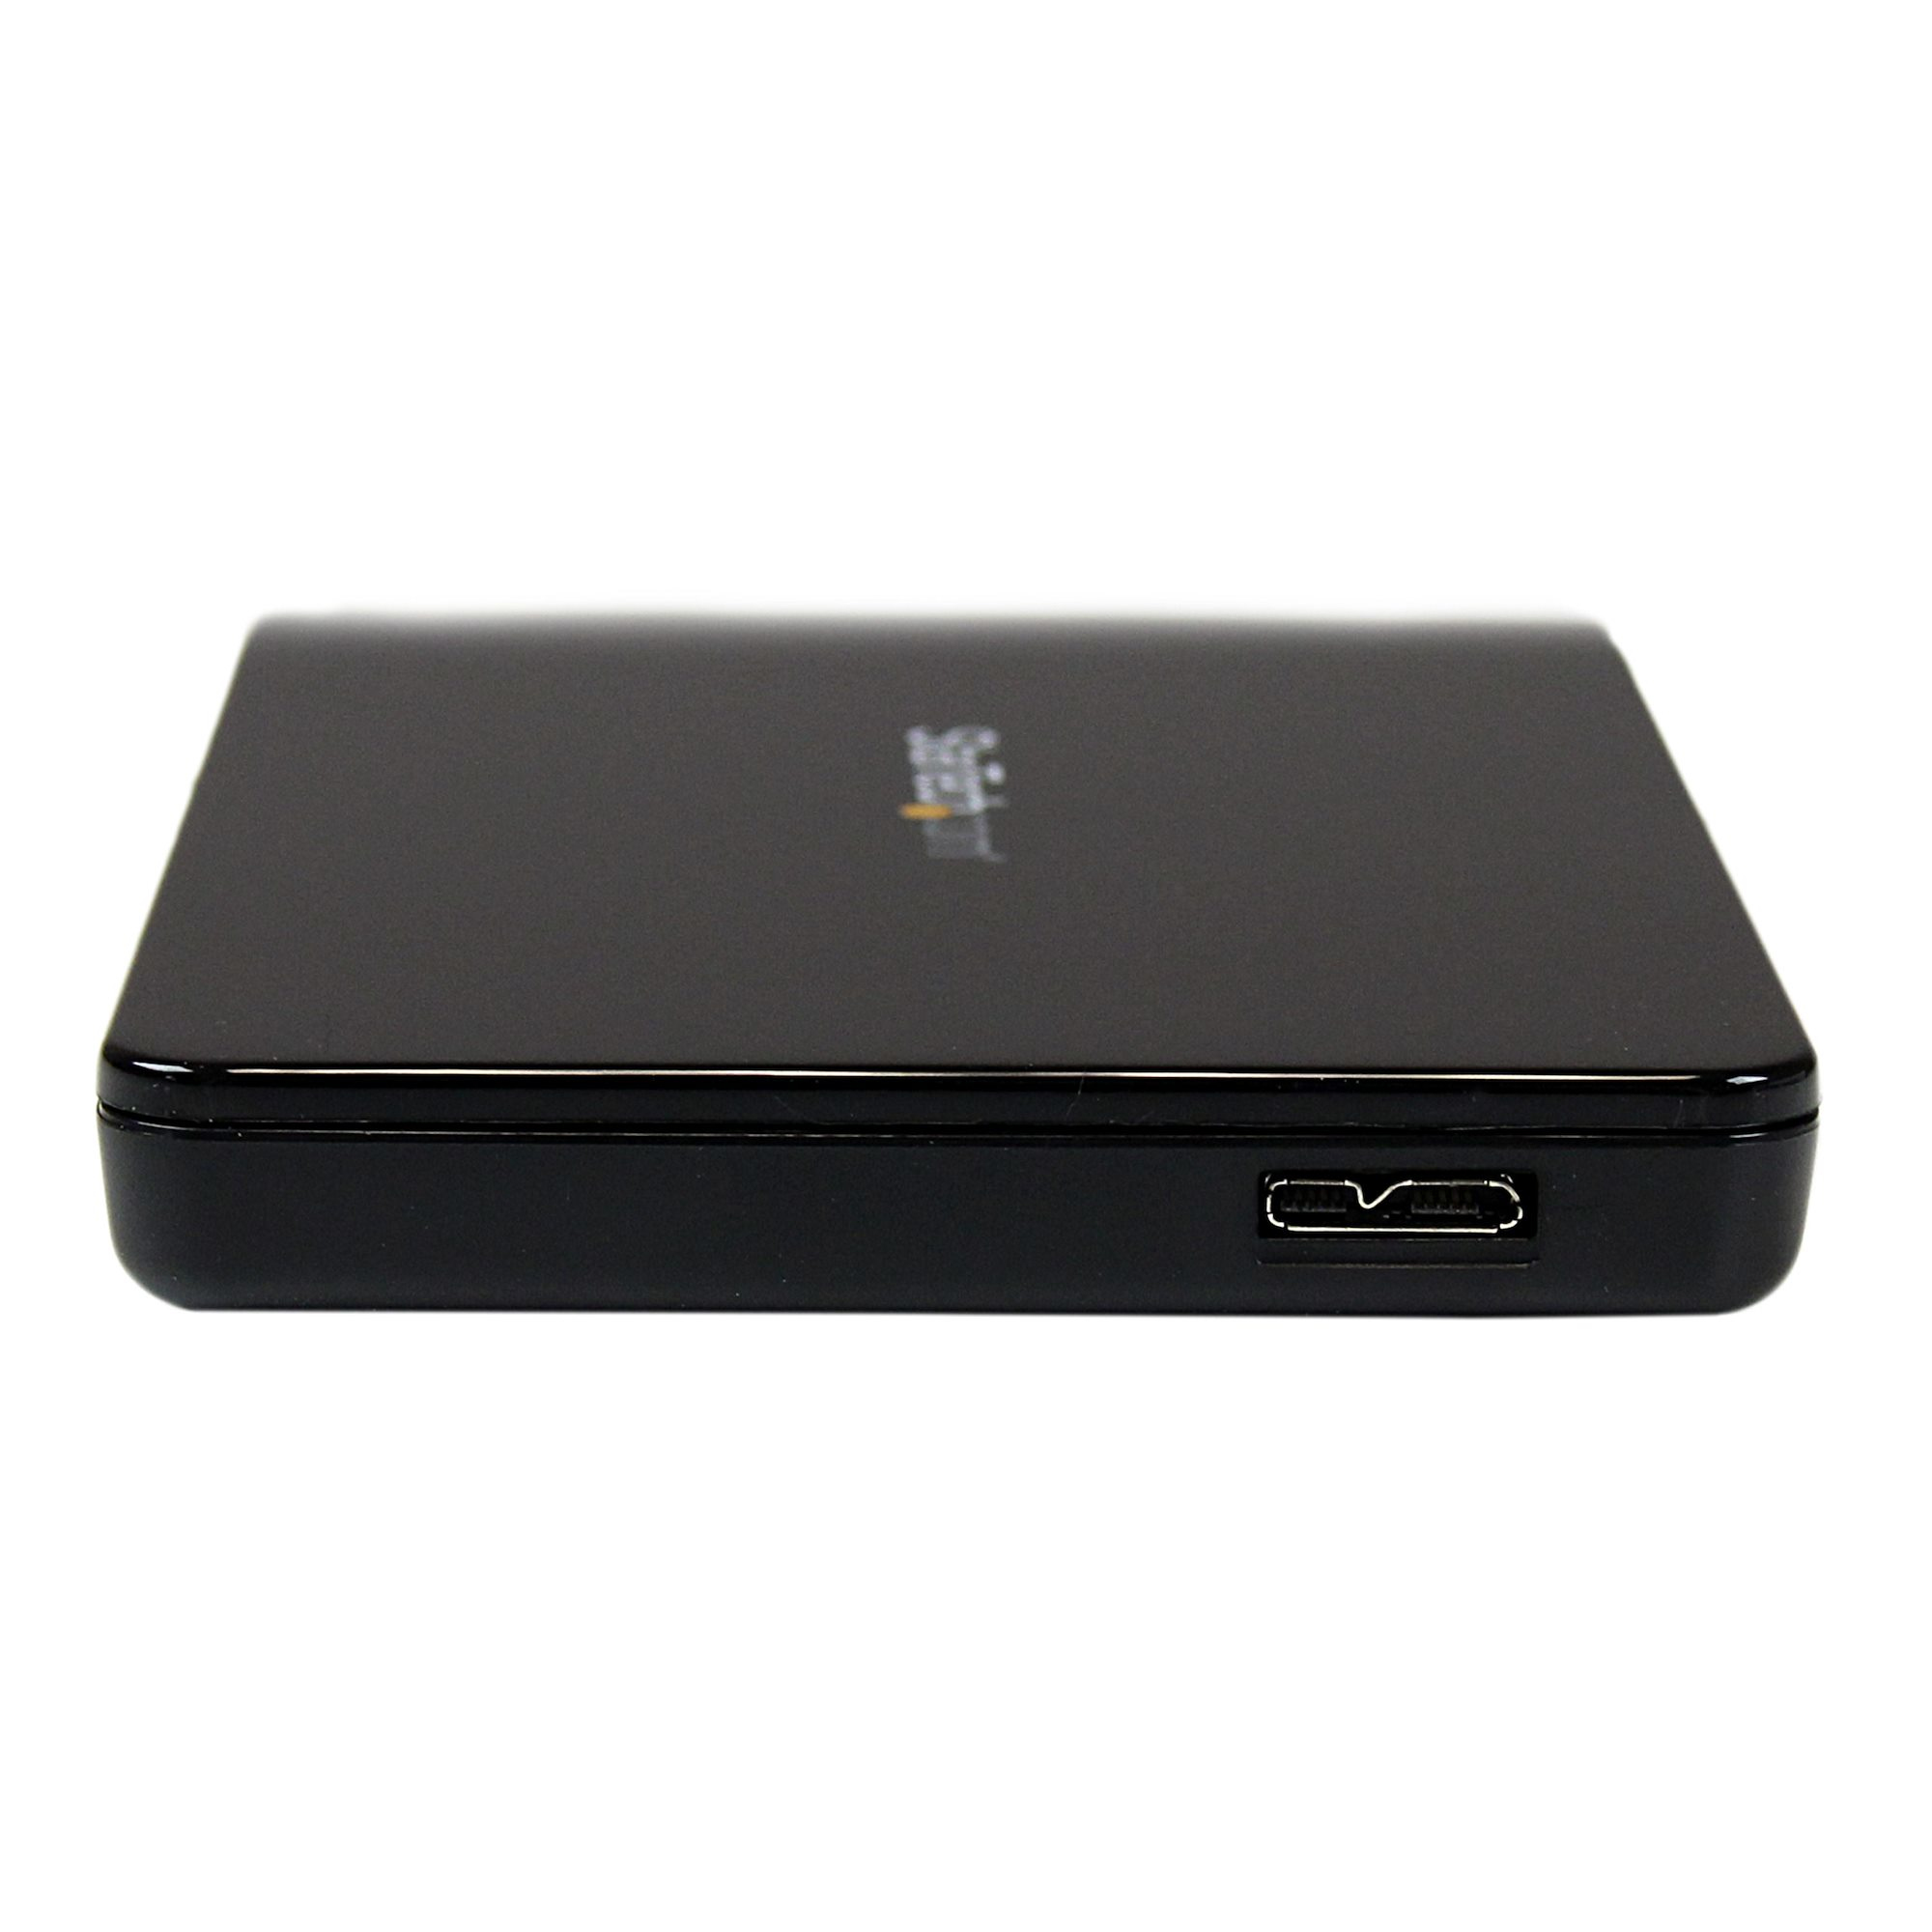 StarTech.com Externes 2,5 SATA III SSD USB 3.0 Festplattengehäuse mit UASP Unterstützung - Schwarzes 2,5 Zoll (6,4cm)